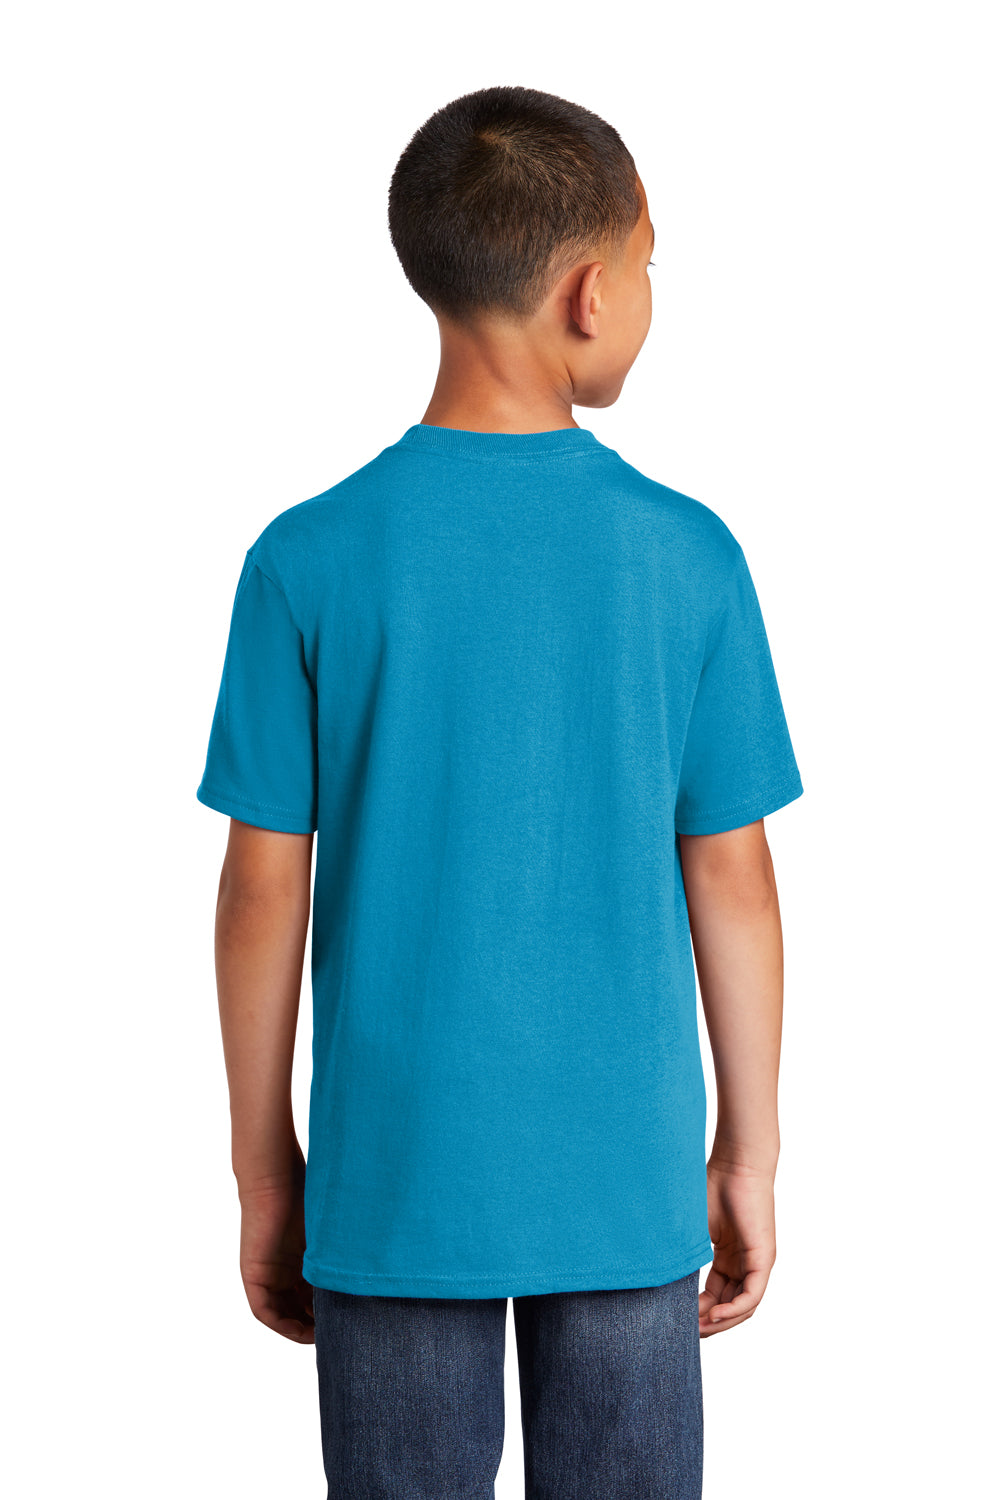 Port & Company PC54Y Youth Core Short Sleeve Crewneck T-Shirt Neon Blue Back